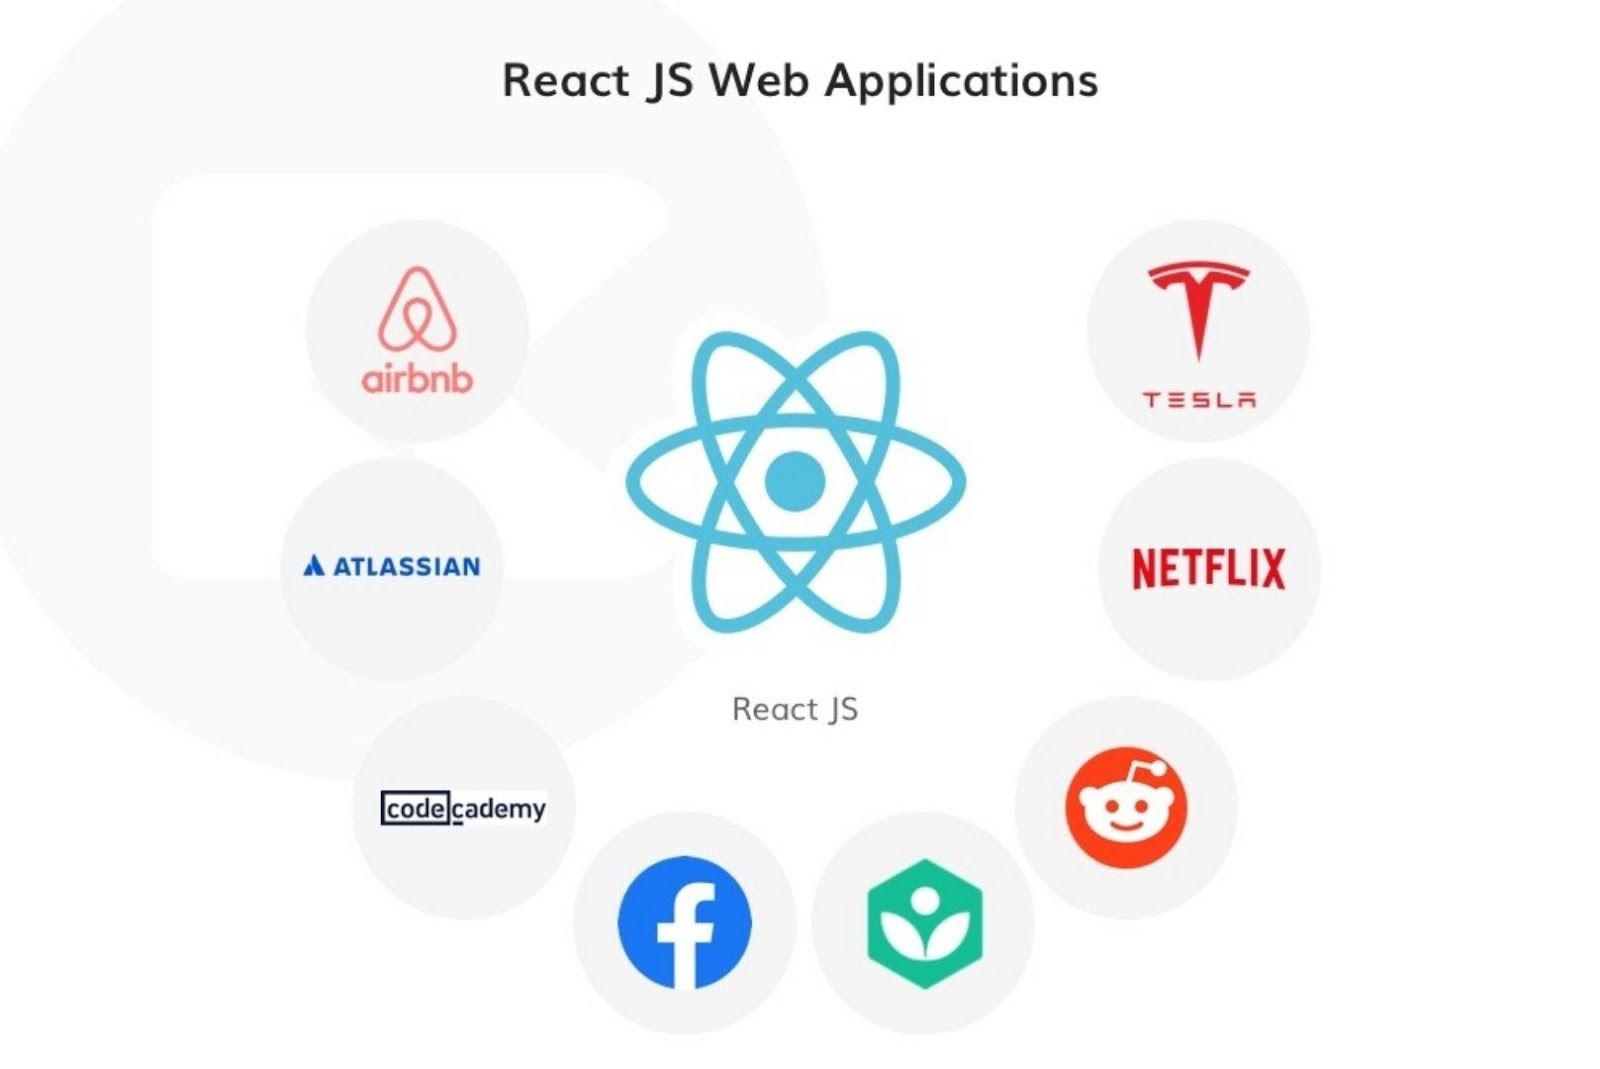 ReactJS web applications